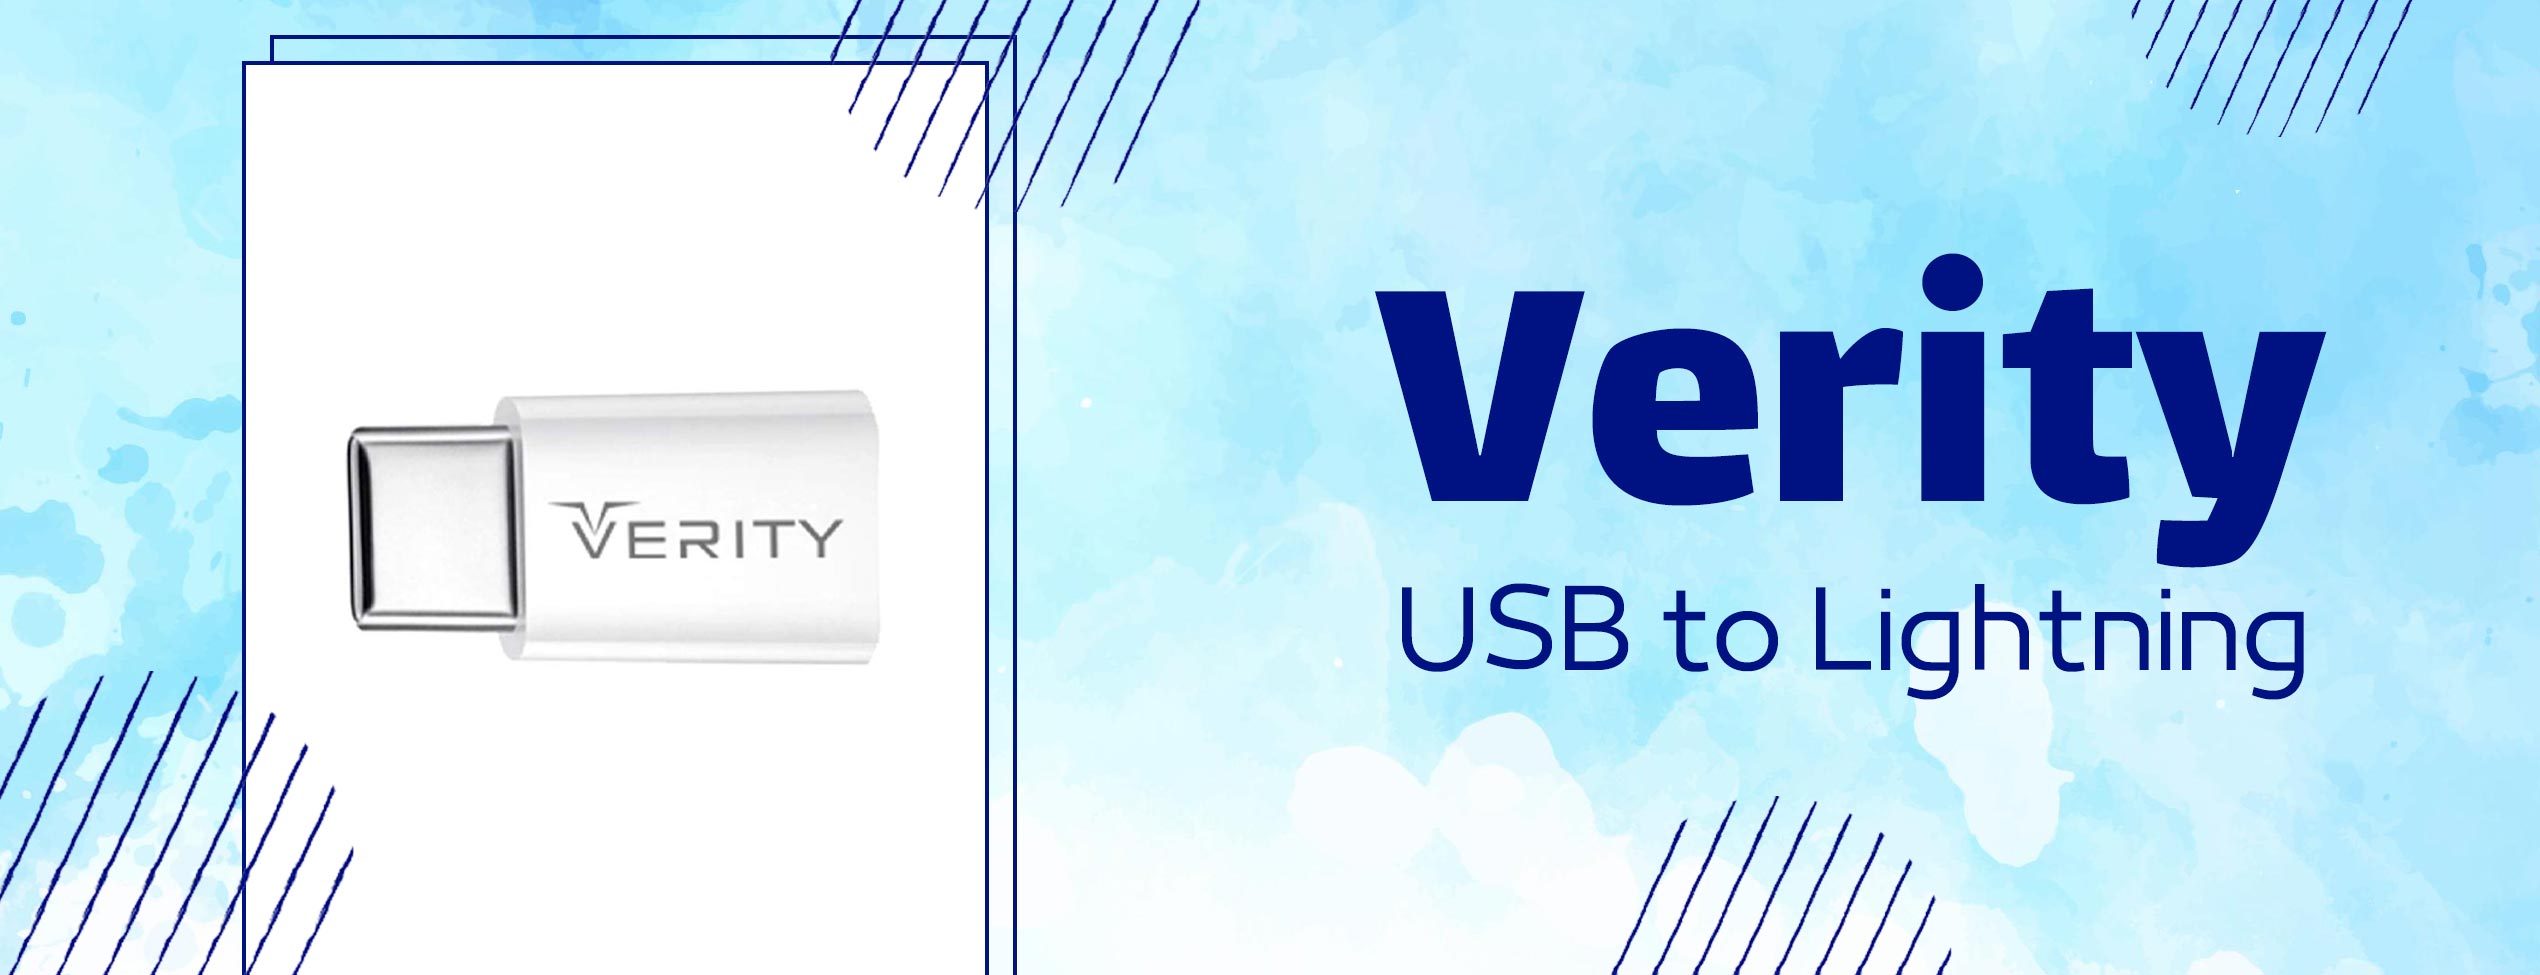 تبدیل USB به Type-C وریتی A301